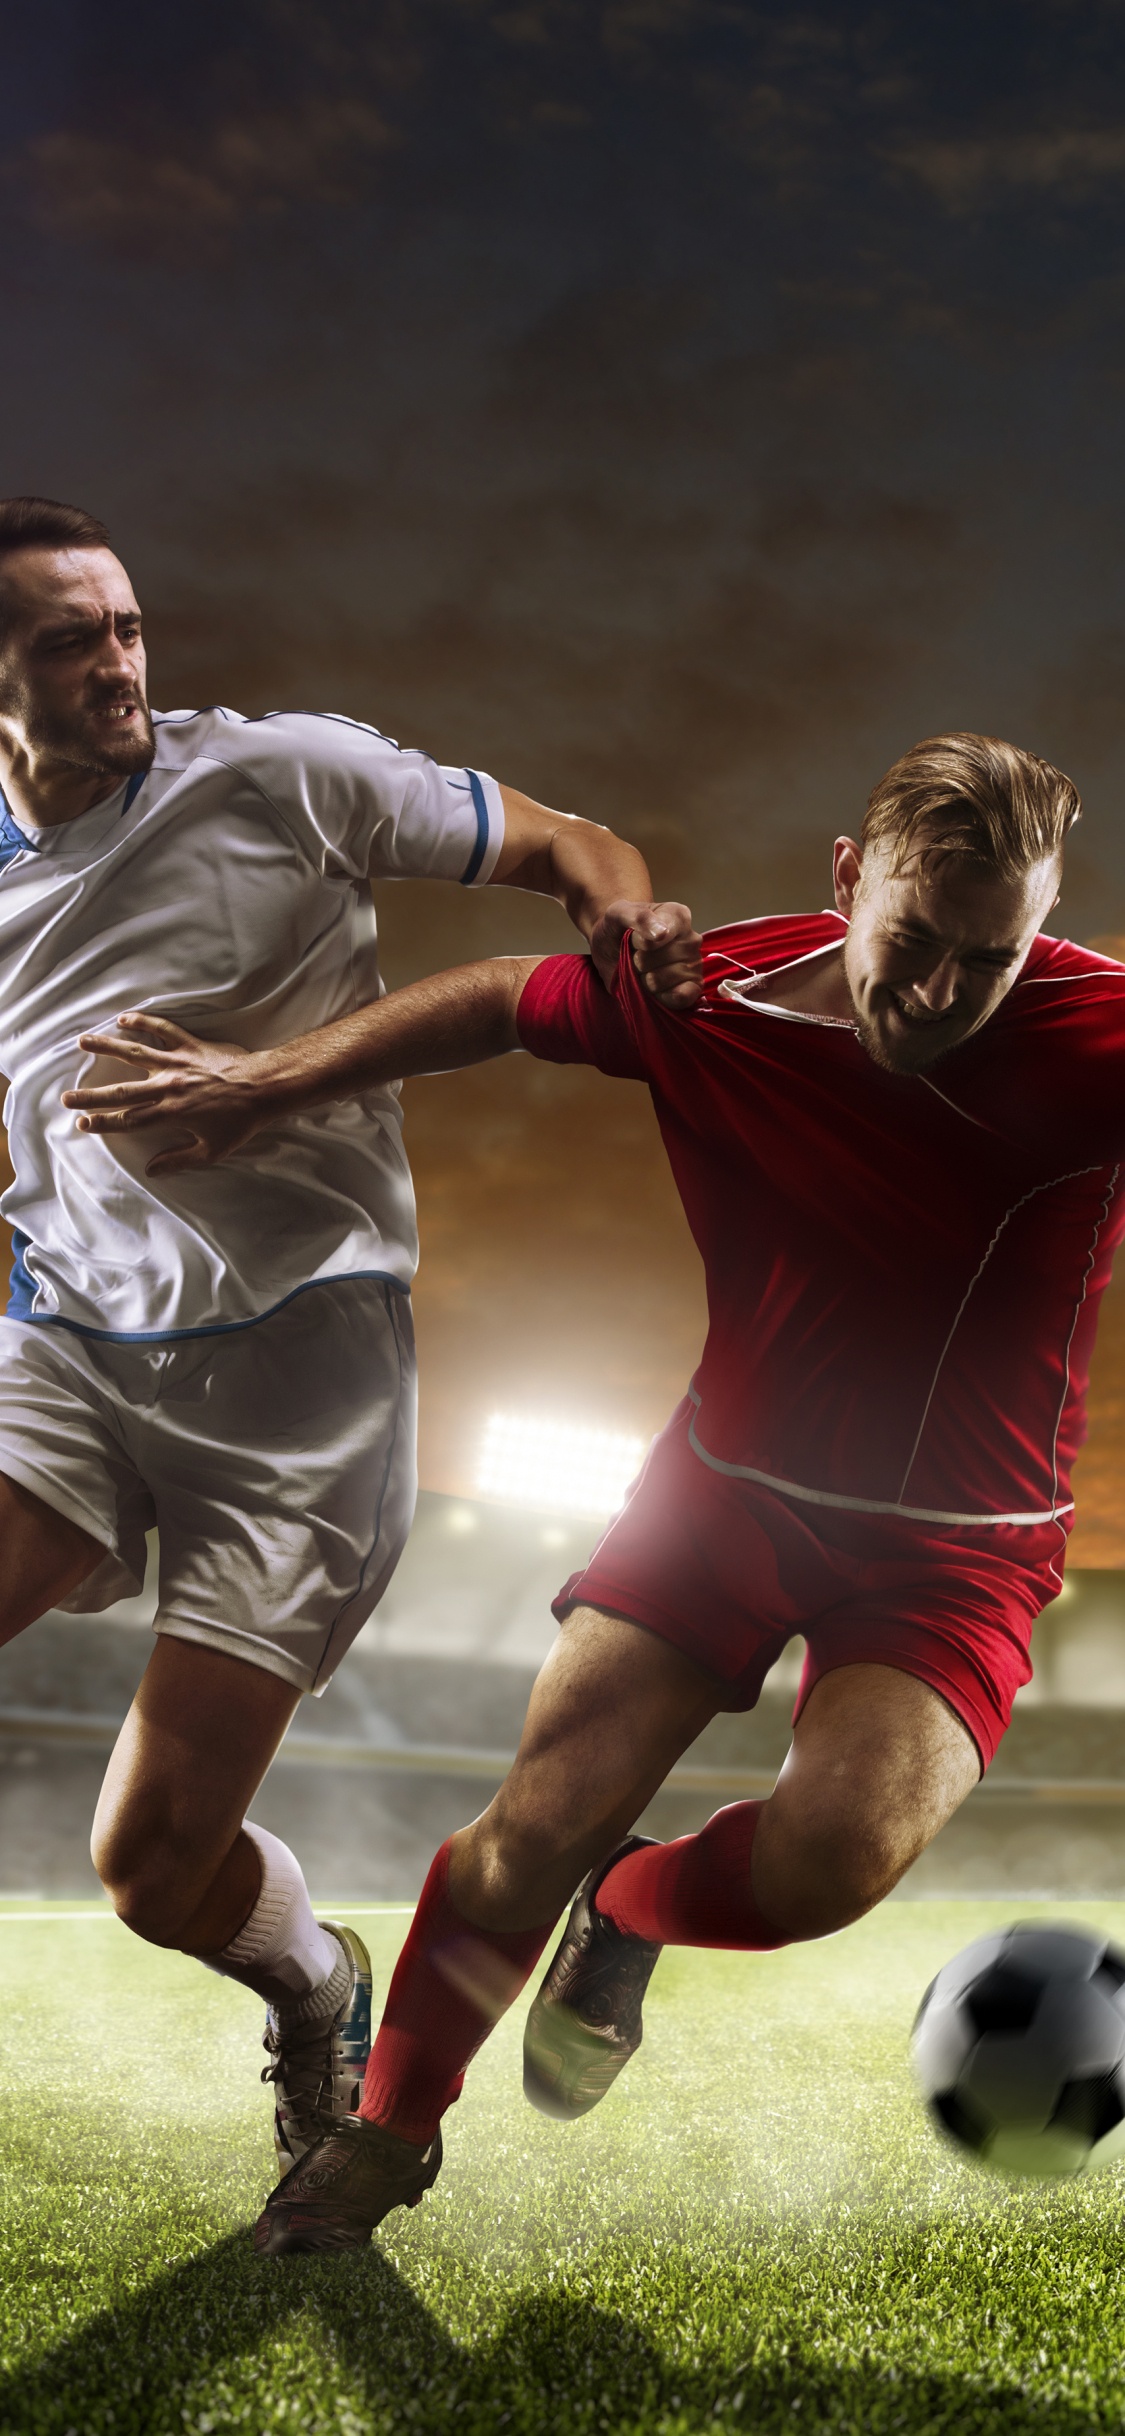 2 Hommes Jouant au Football Sur Terrain en Herbe Verte Pendant la Nuit. Wallpaper in 1125x2436 Resolution